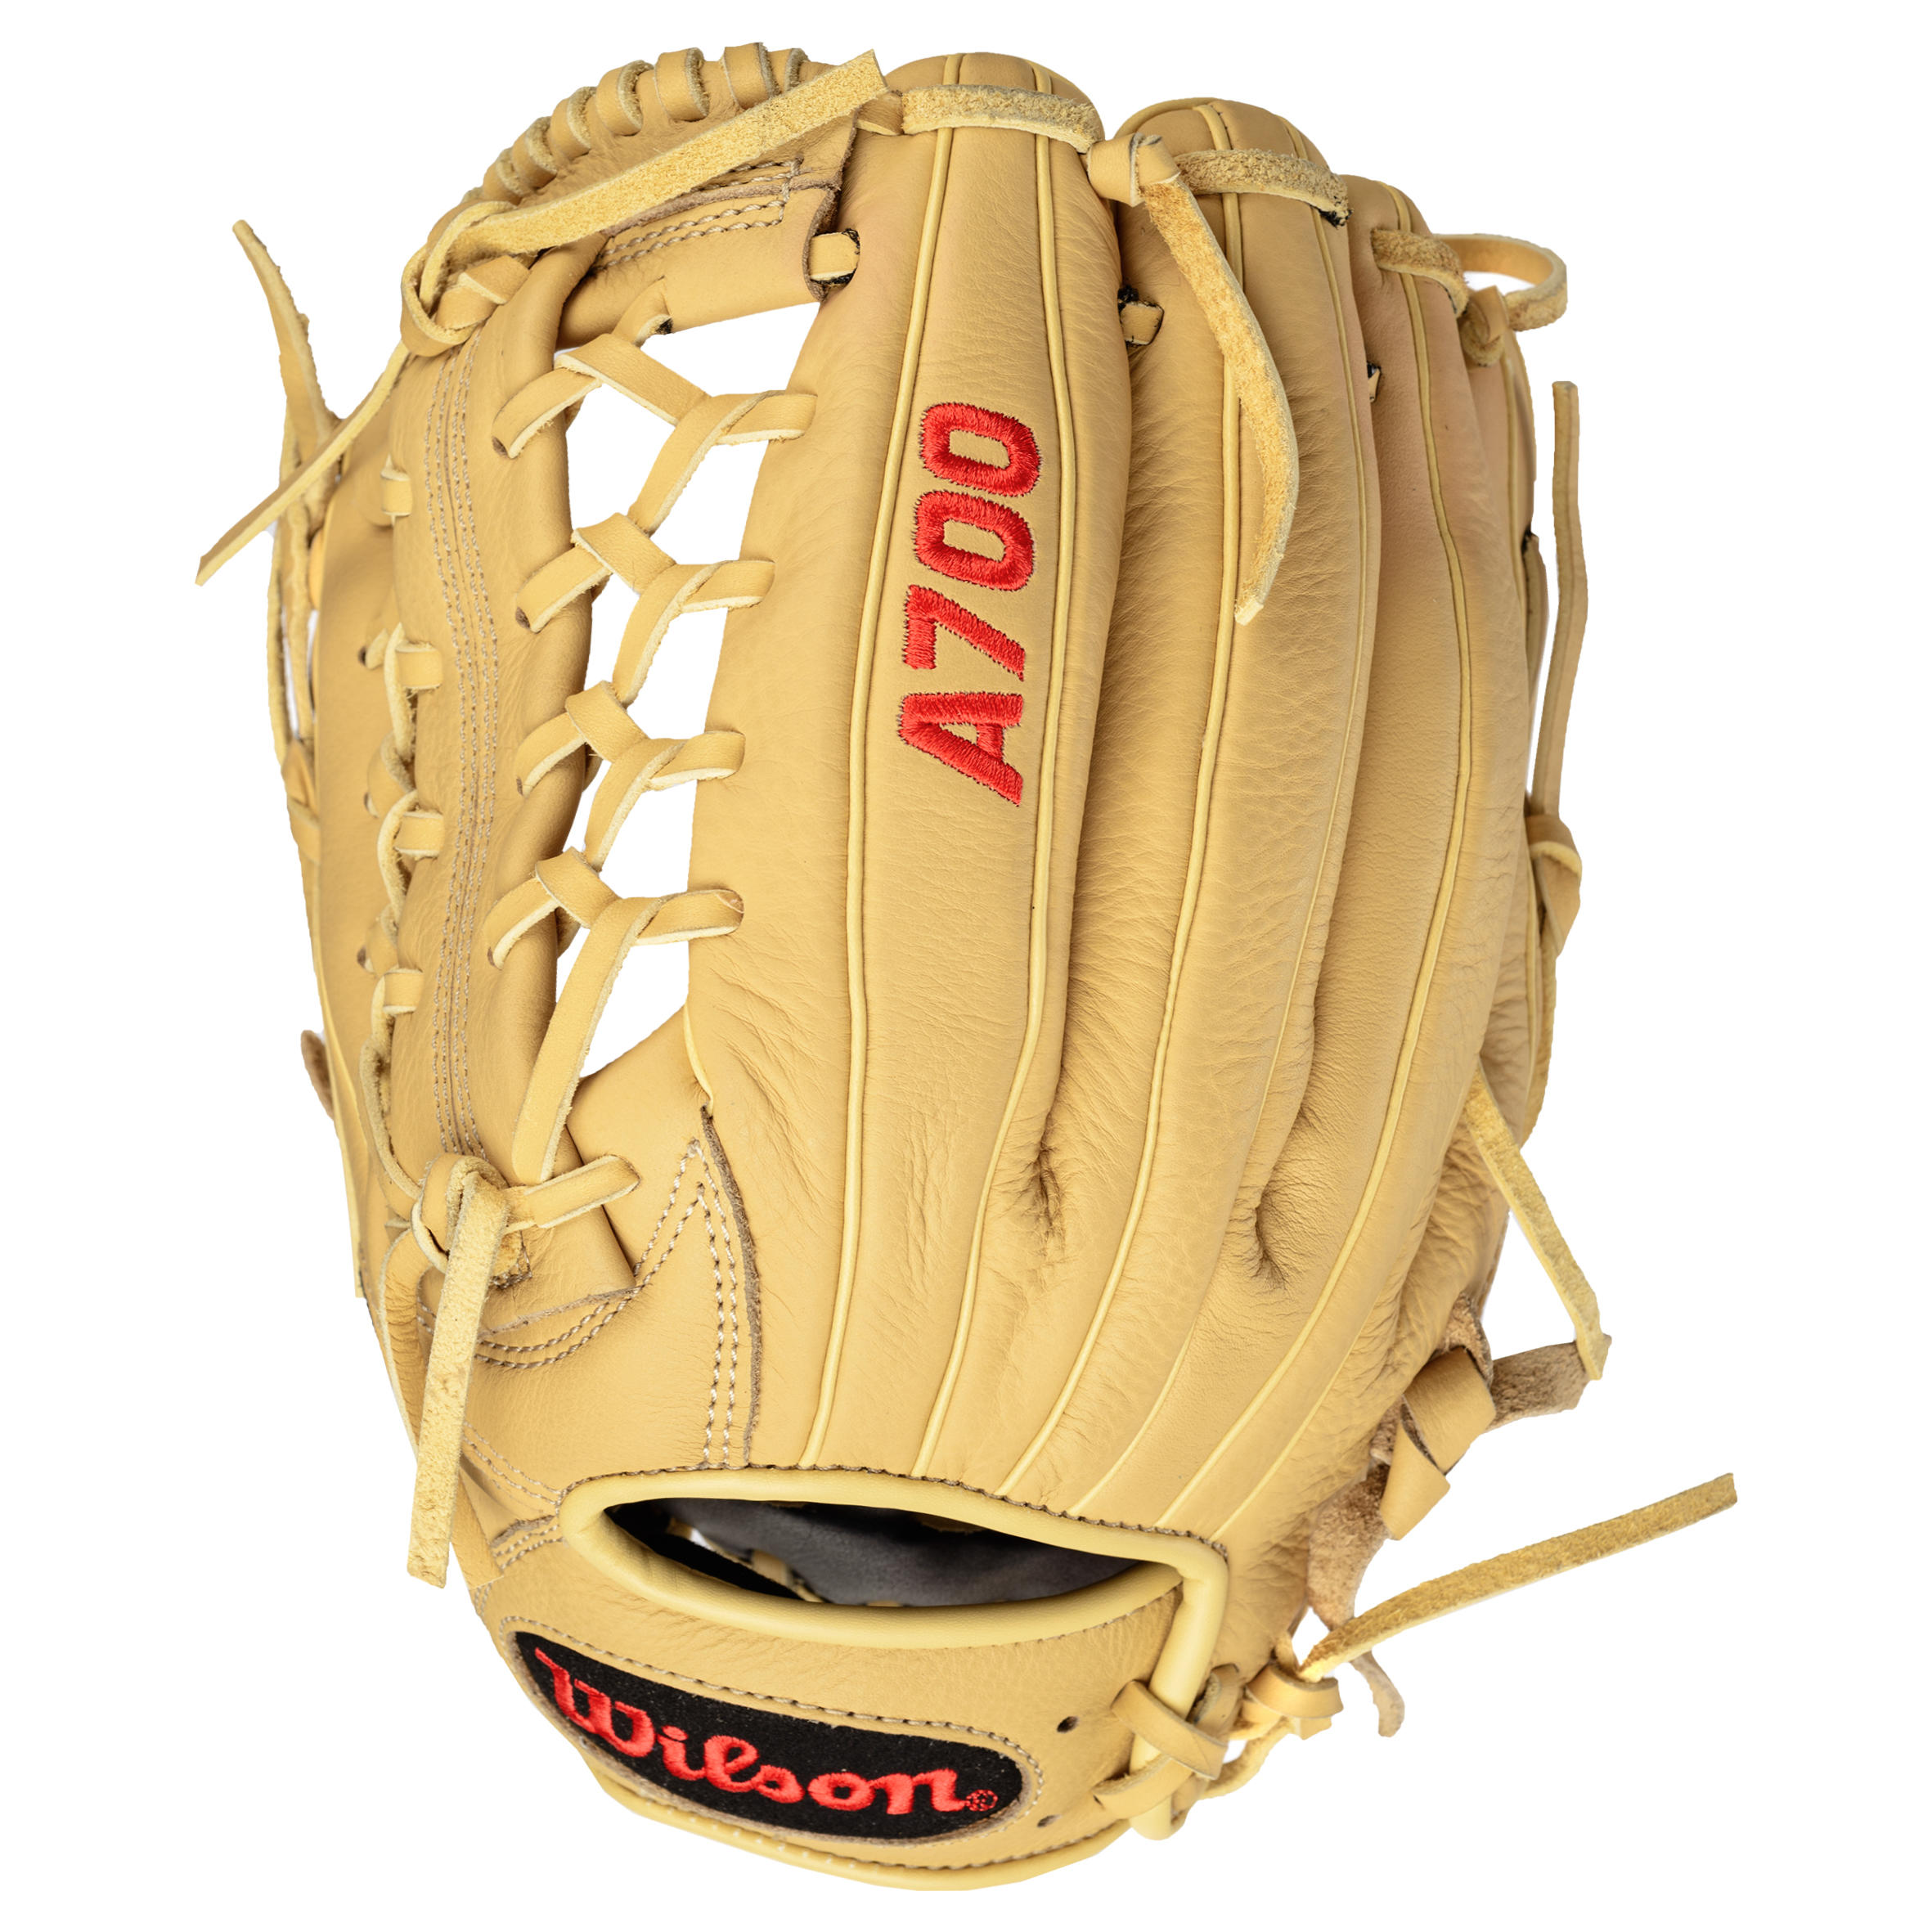 A700 12-Inch Right-Hand Baseball Glove - Beige 2/5